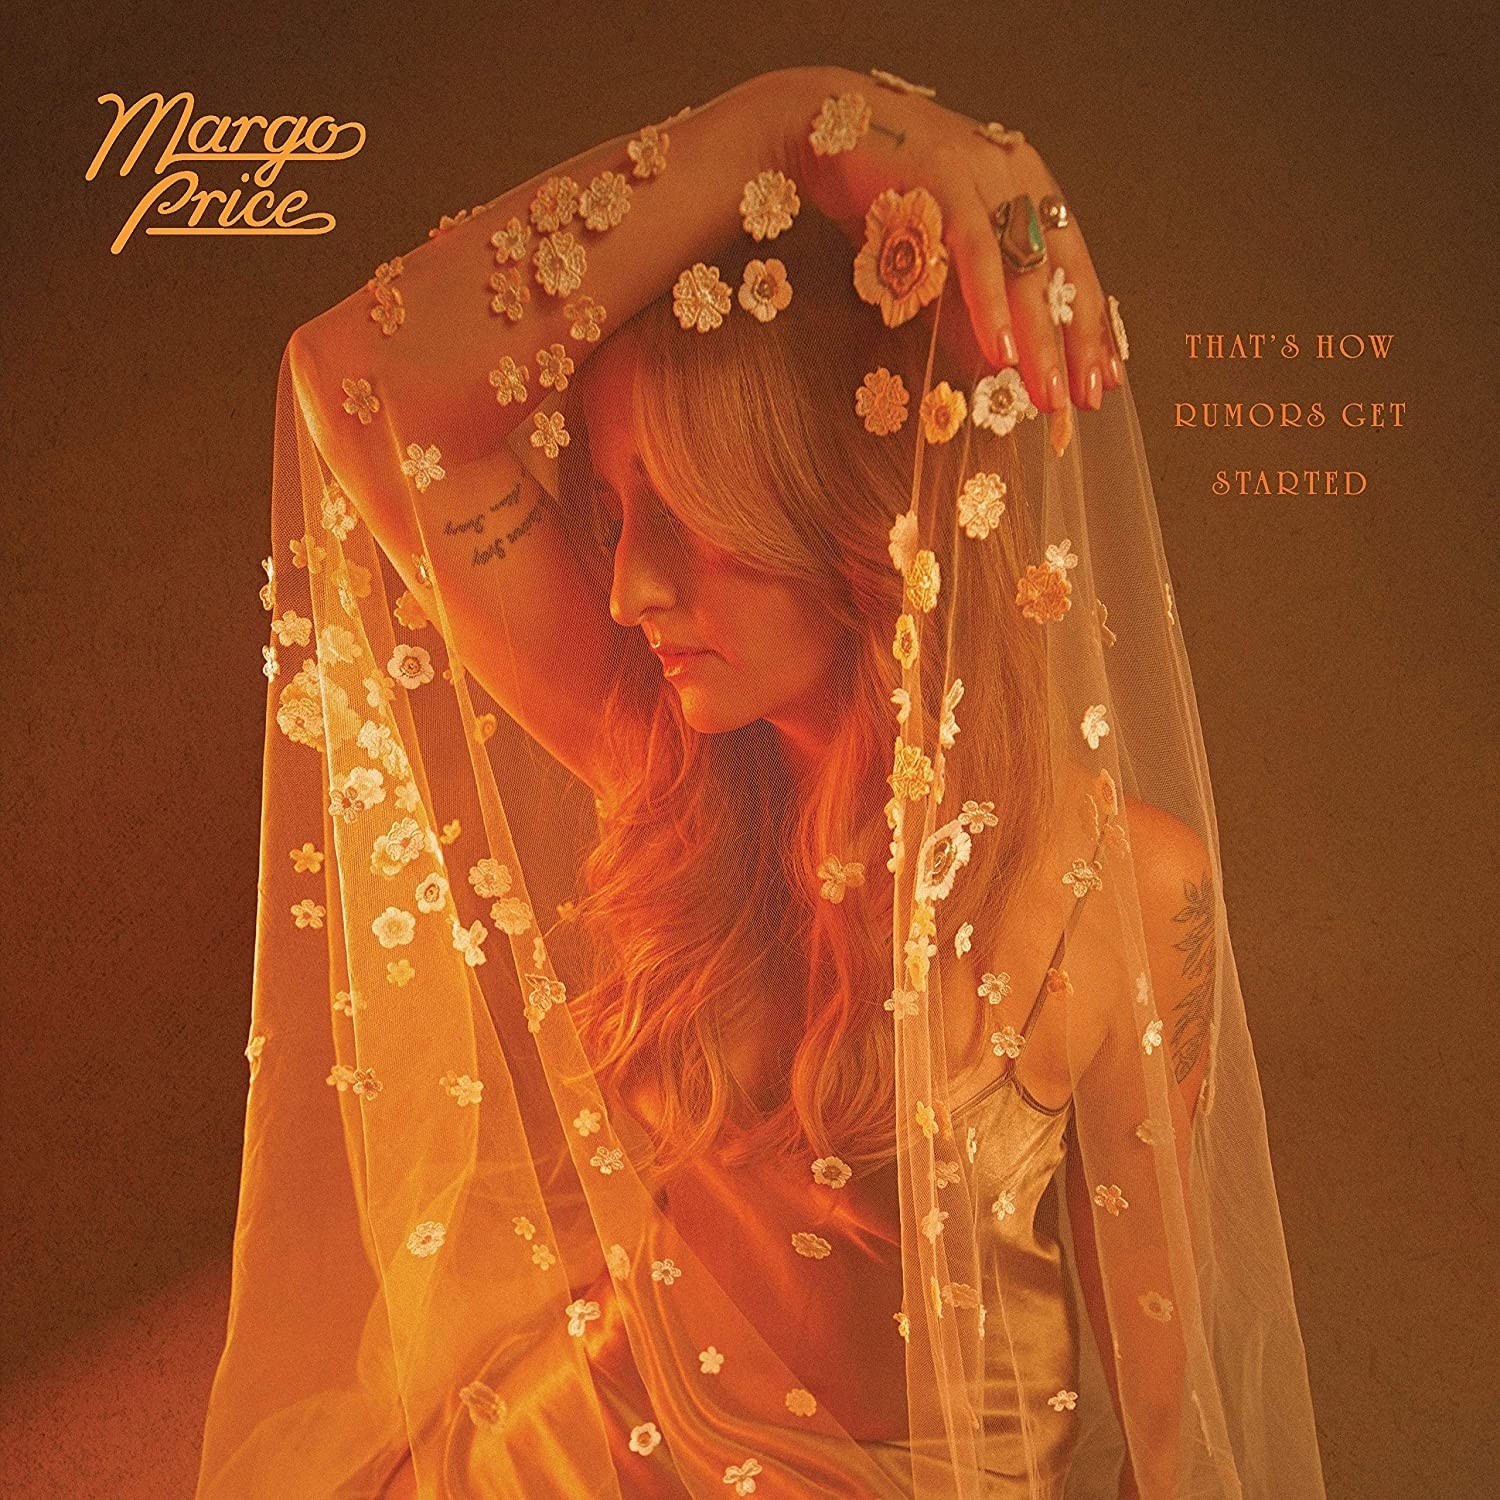 Margo Price - That's How Rumors Get Started VinylLP